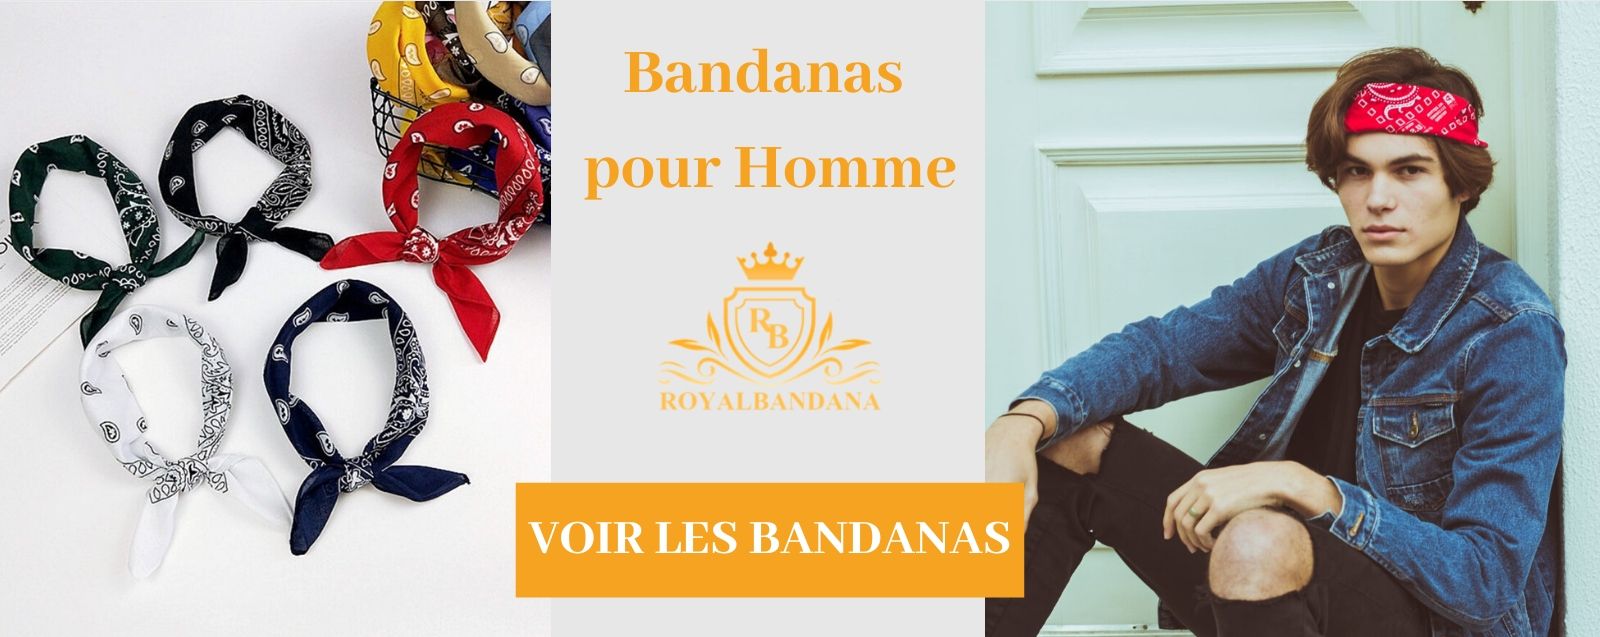 voir Collection Bandanas homme royalbandana